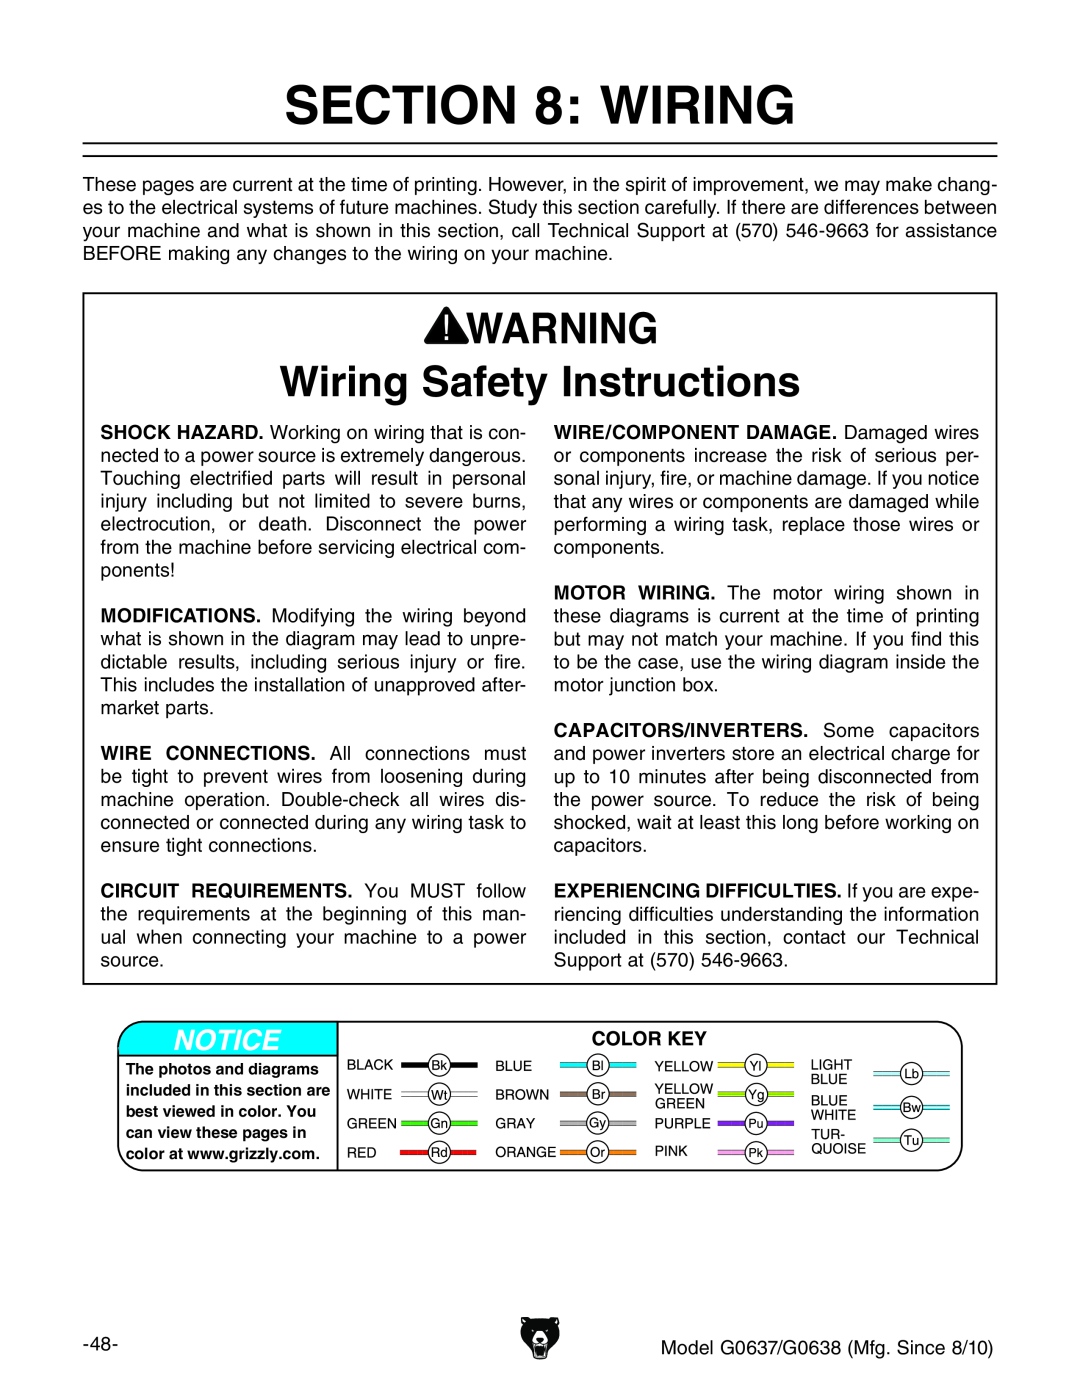 Grizzly G0637 Wiring Safety Instructions, SHOCK HAZARD. Ldg`^c\dcl^g^c\iVi^hXdc, edcZcih, XdbedcZcih# 